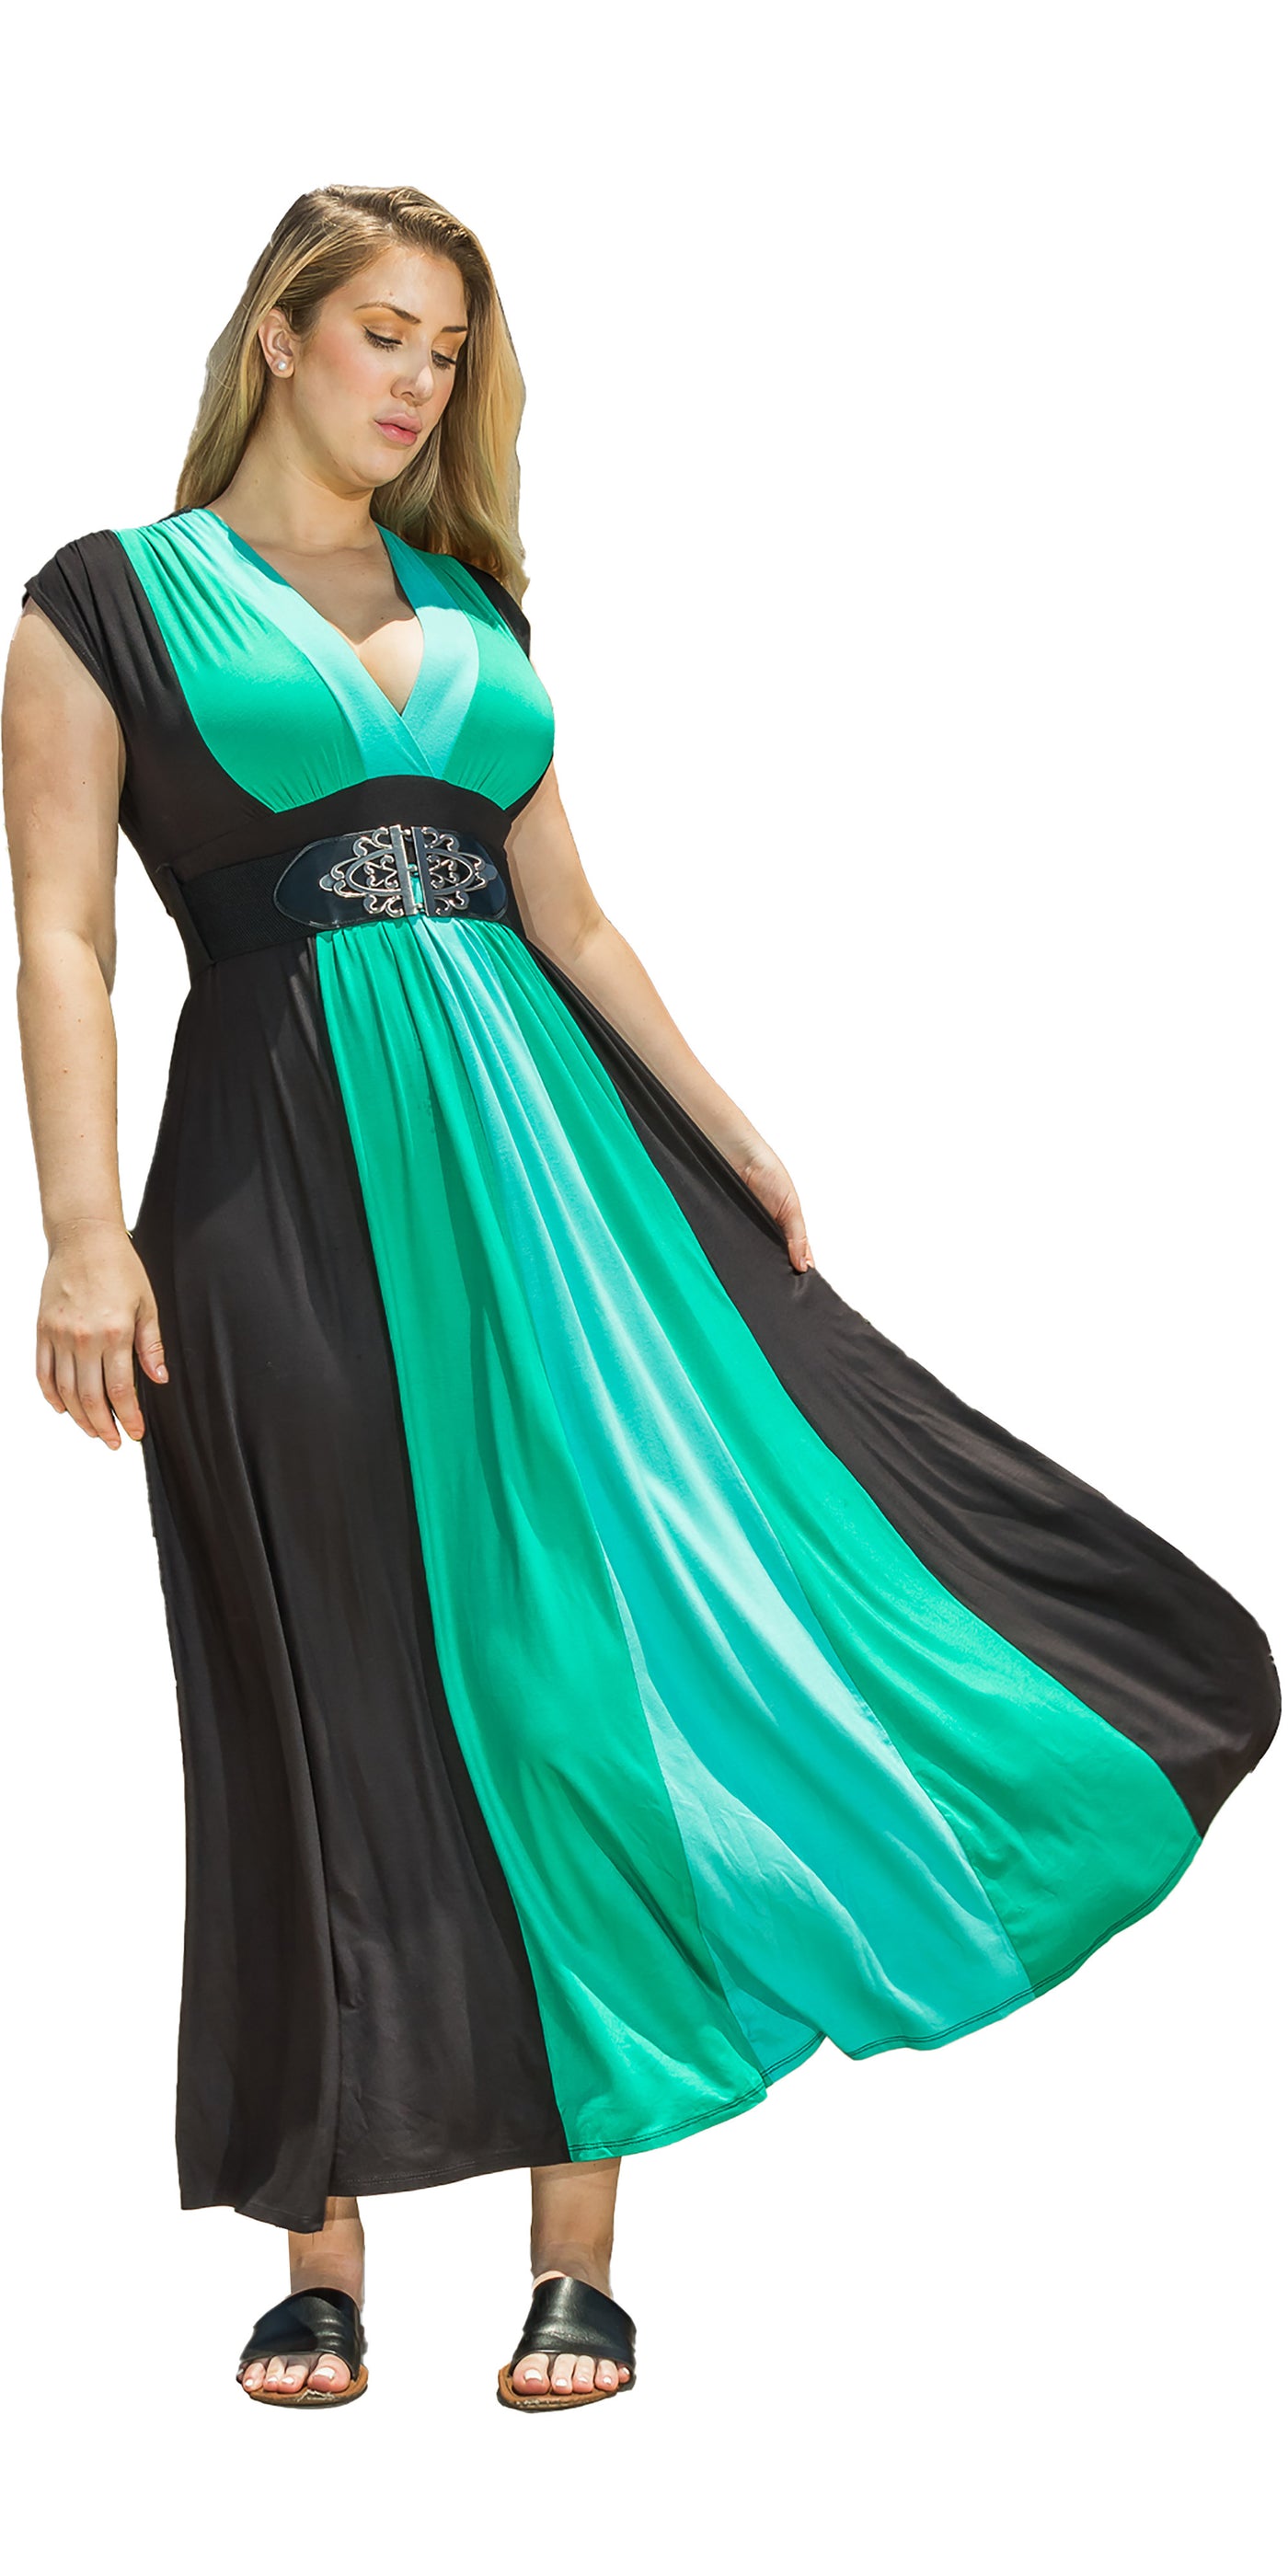 The Emerald Dress